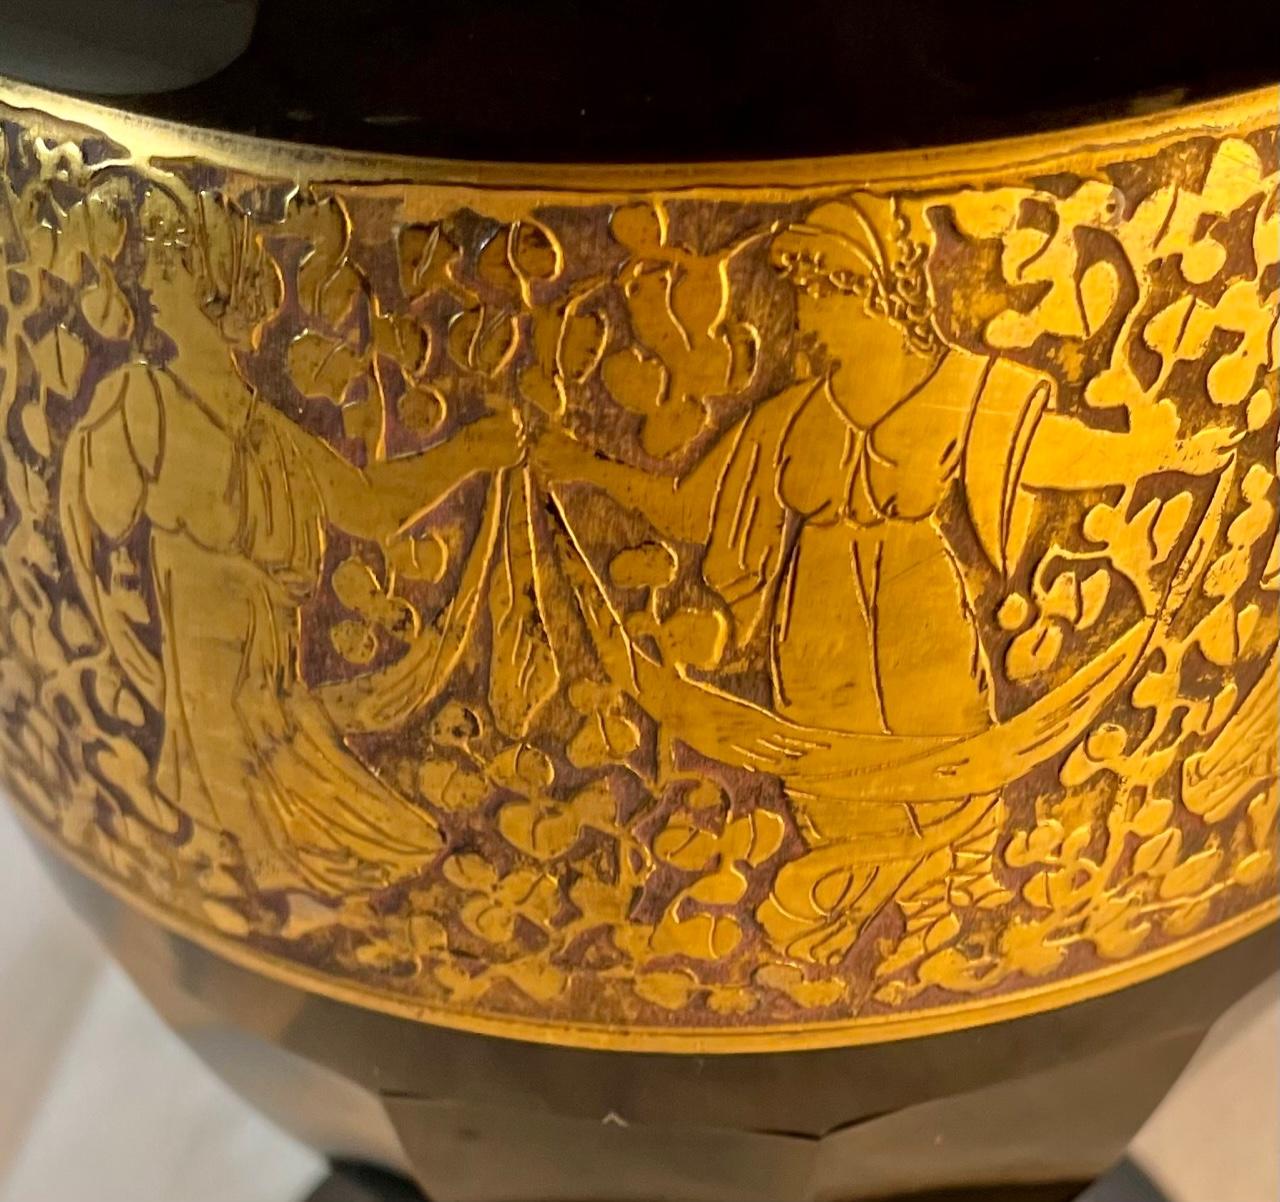 Art Glass Art Nouveau Haida Moser Amethyst Amphora Vase by Adolf Rasche c1910, Signed.